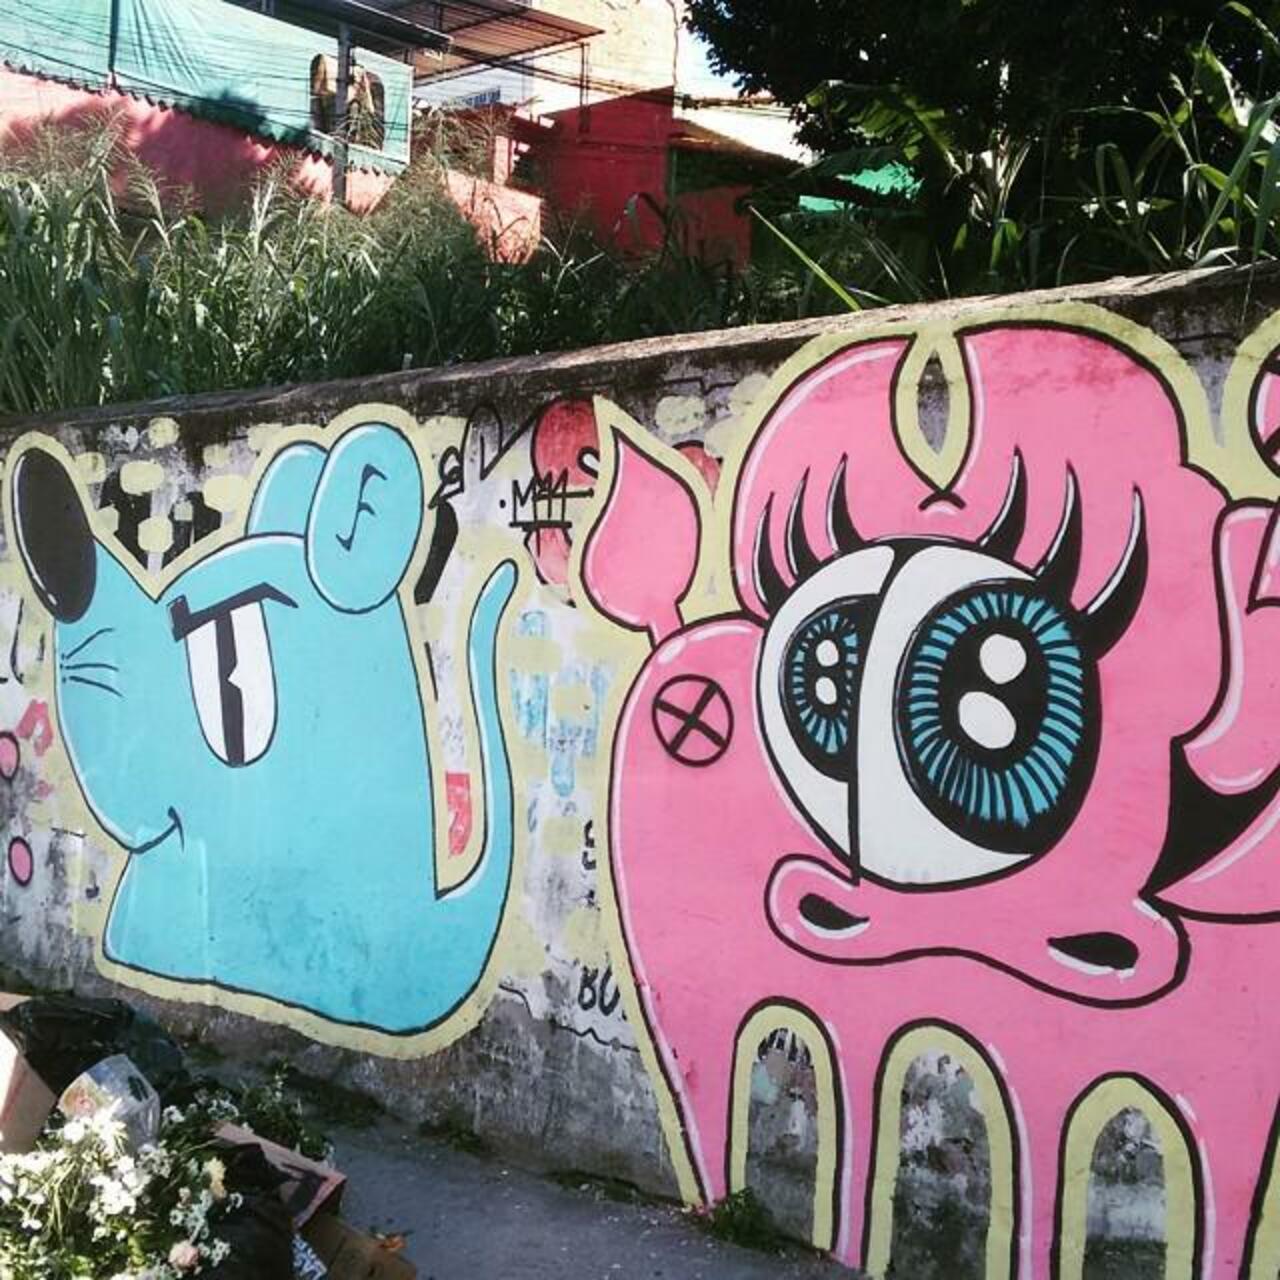 Domingão
#graffiti #arte #arteurbana #elgraffiti #graphite #art #streetart #StreetArtRio  #cultural #sãogonçalo  #h… http://t.co/28xInPpNjt